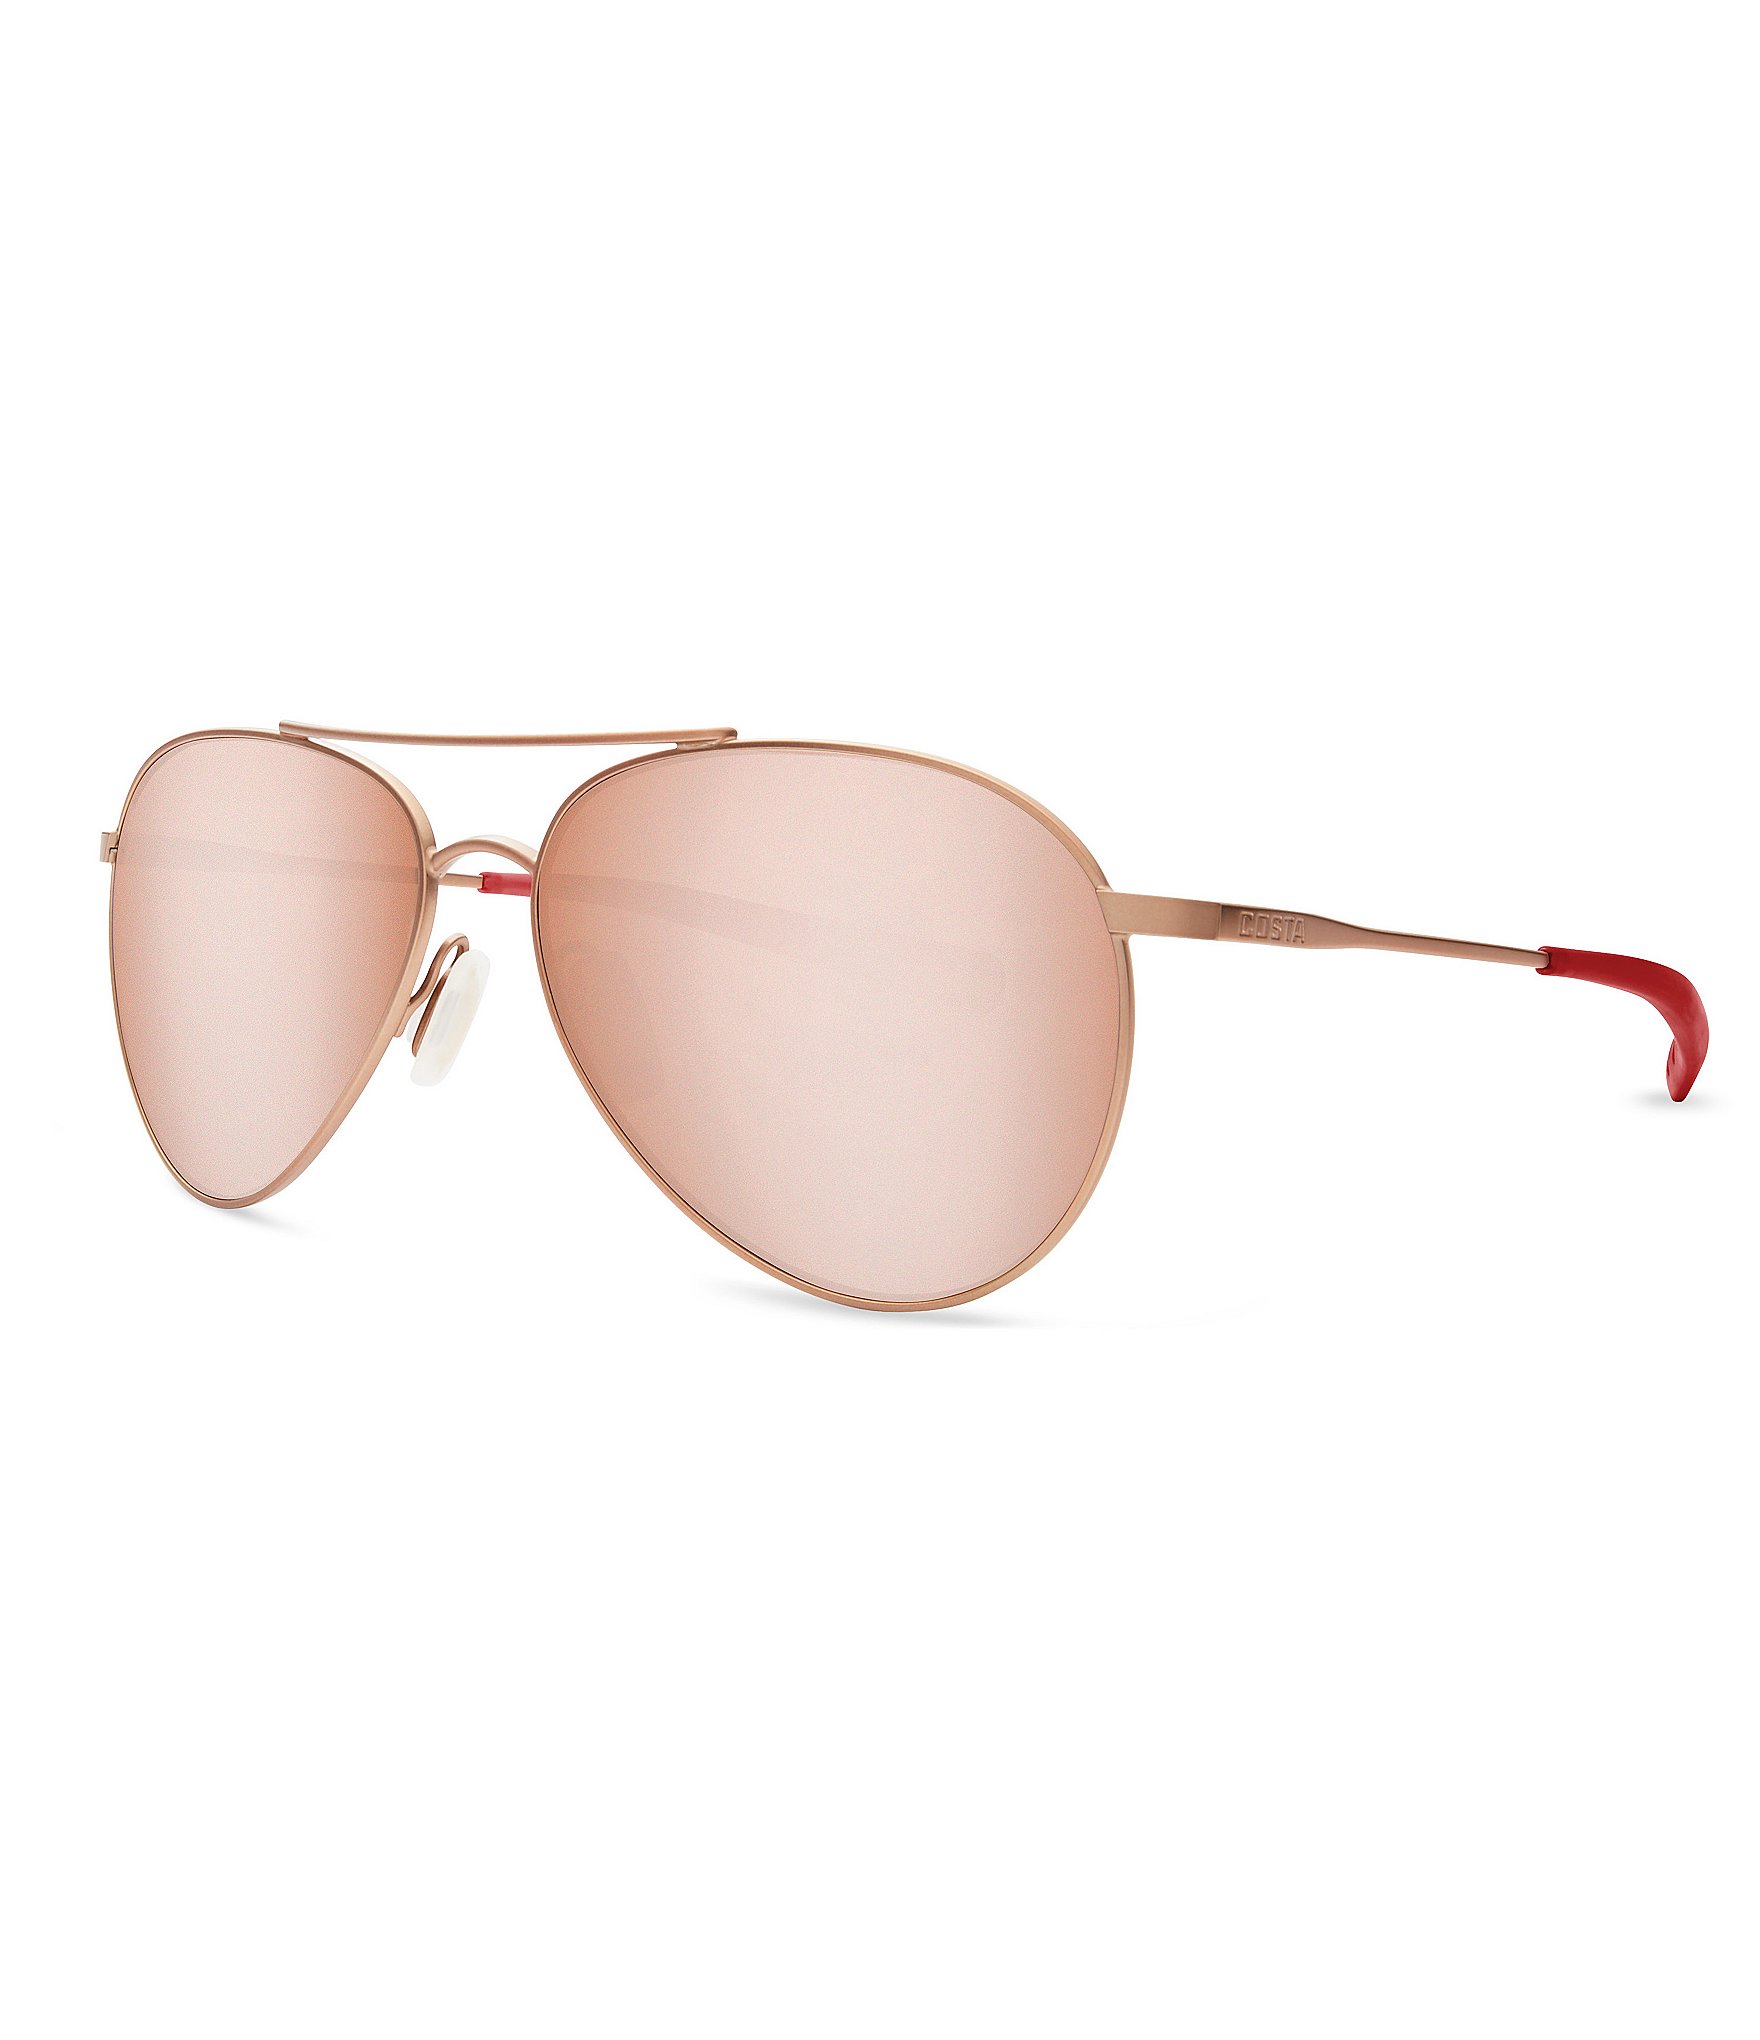 rose gold sunglasses